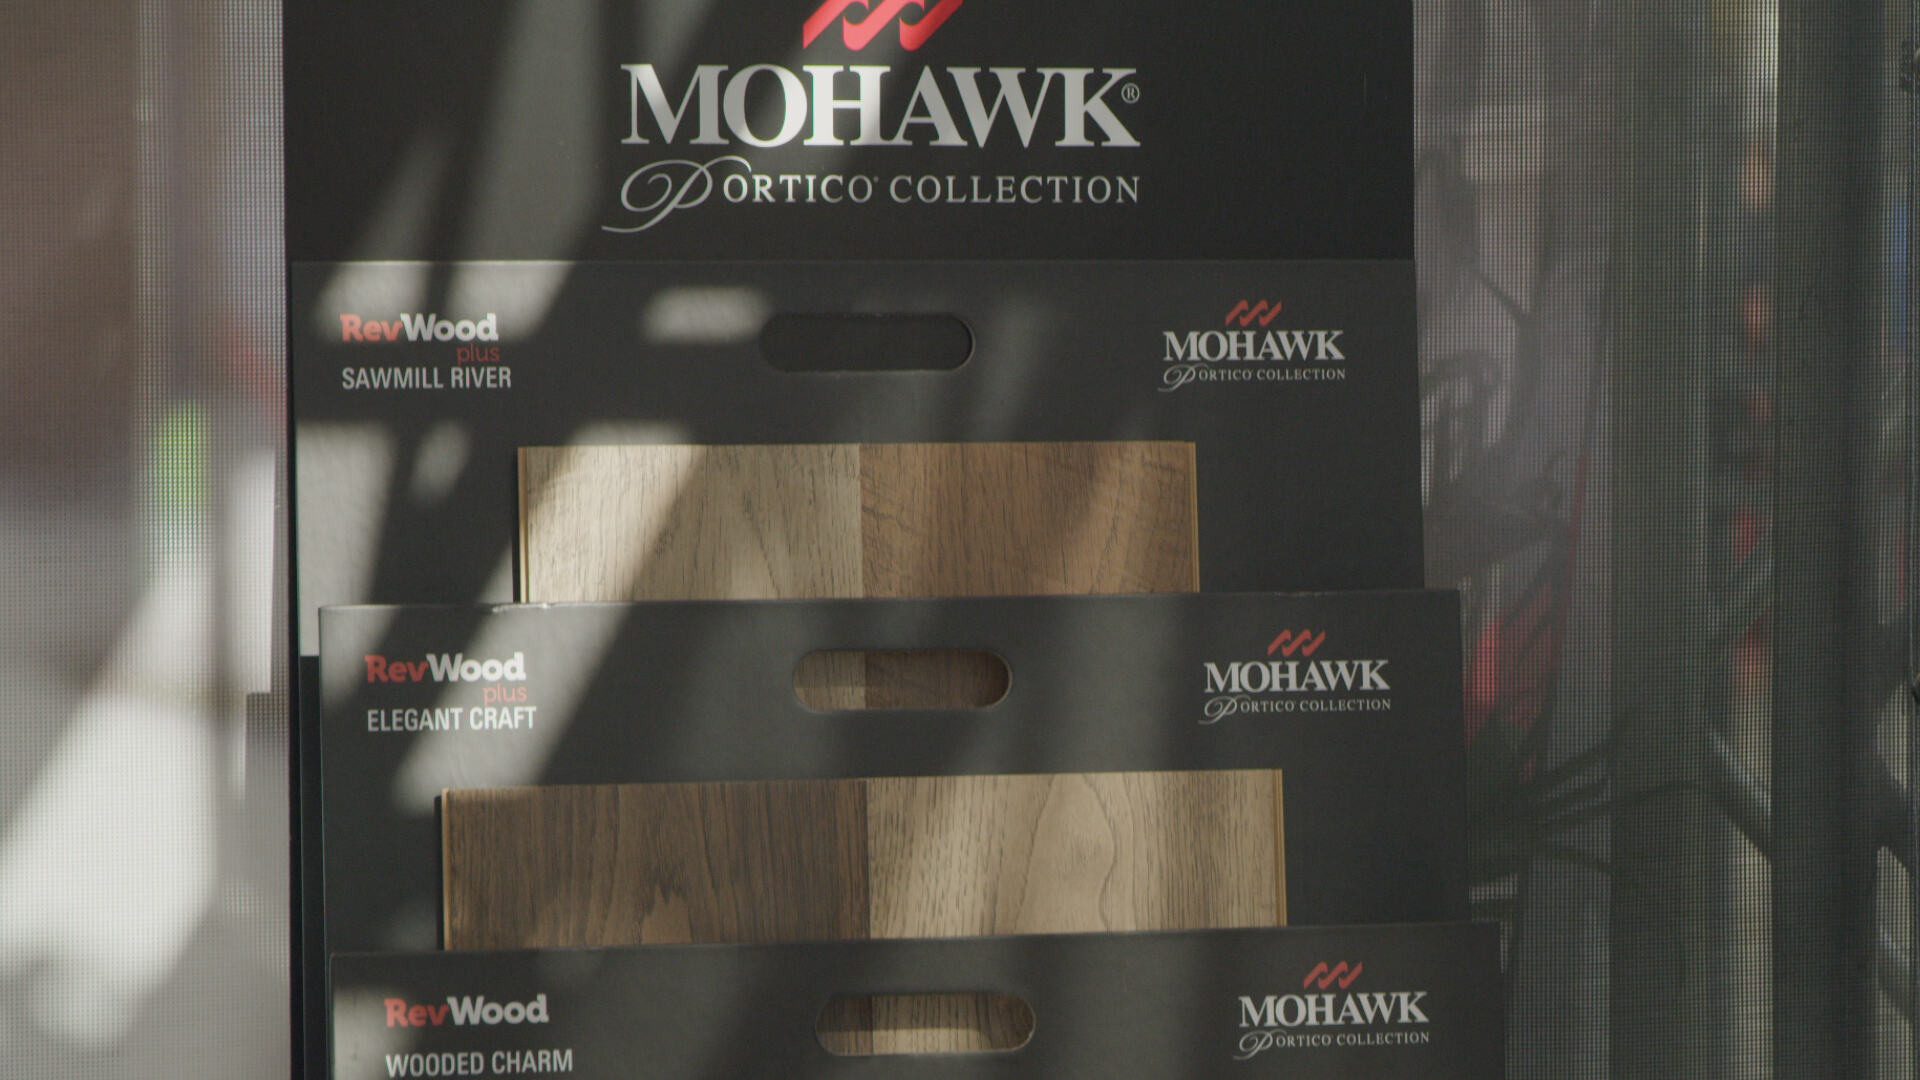 Mohawk S Revwood Flooring Creates Look, Mohawk Portico Collection Hardwood Flooring